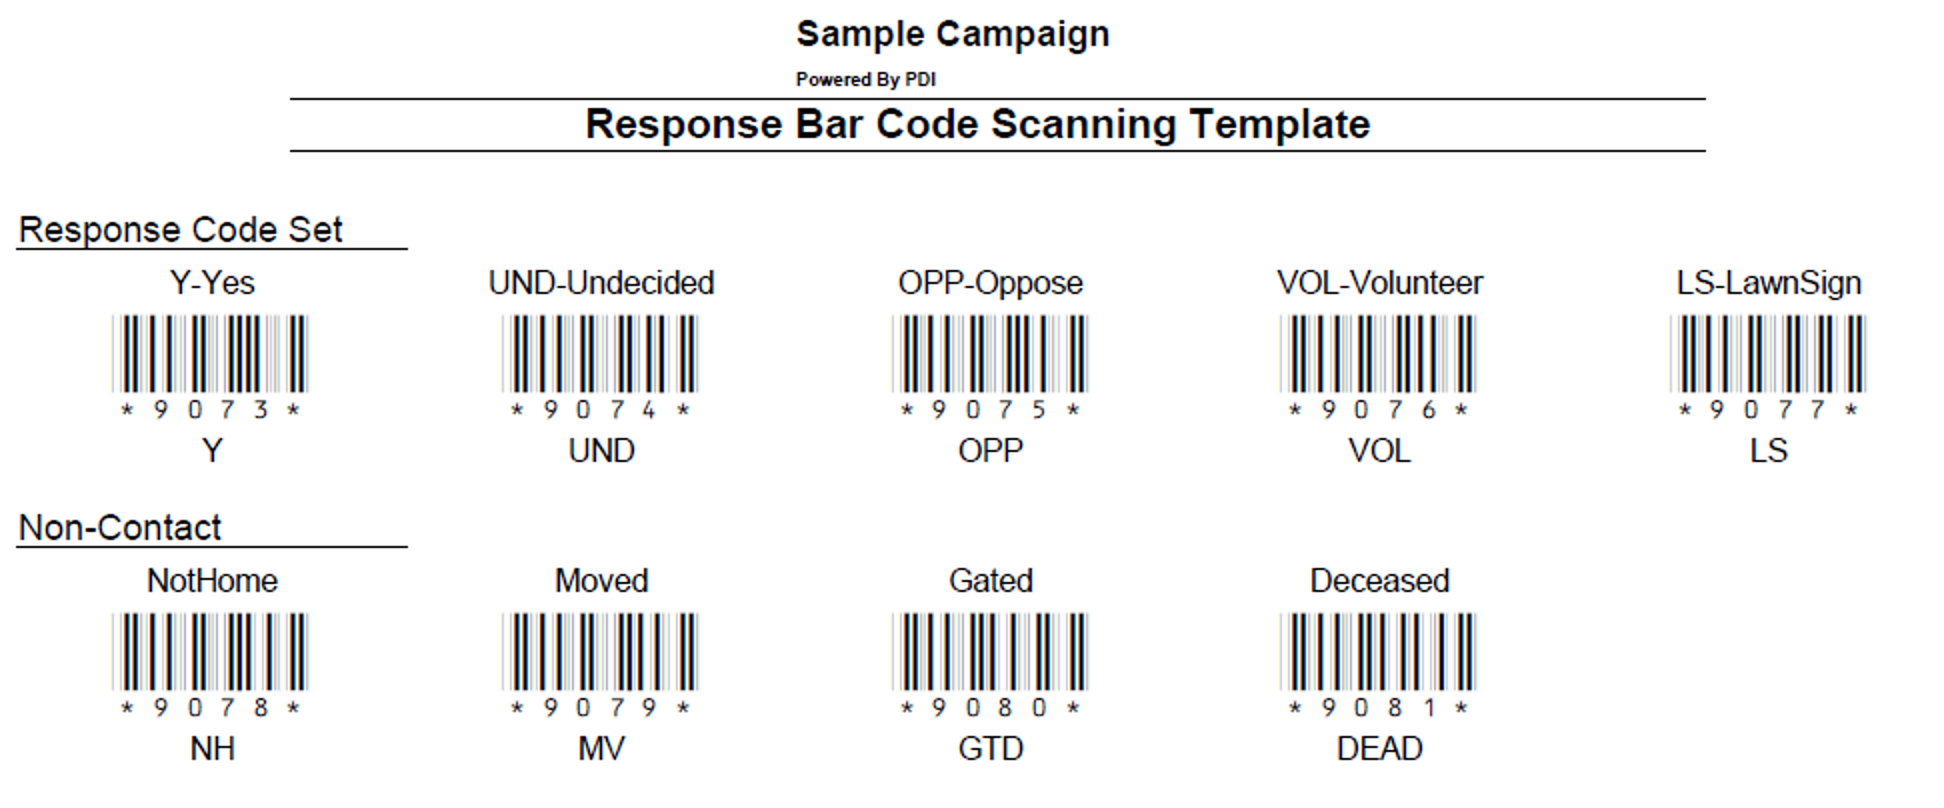 Standard_Barcode_Scanning_Response_Template.png